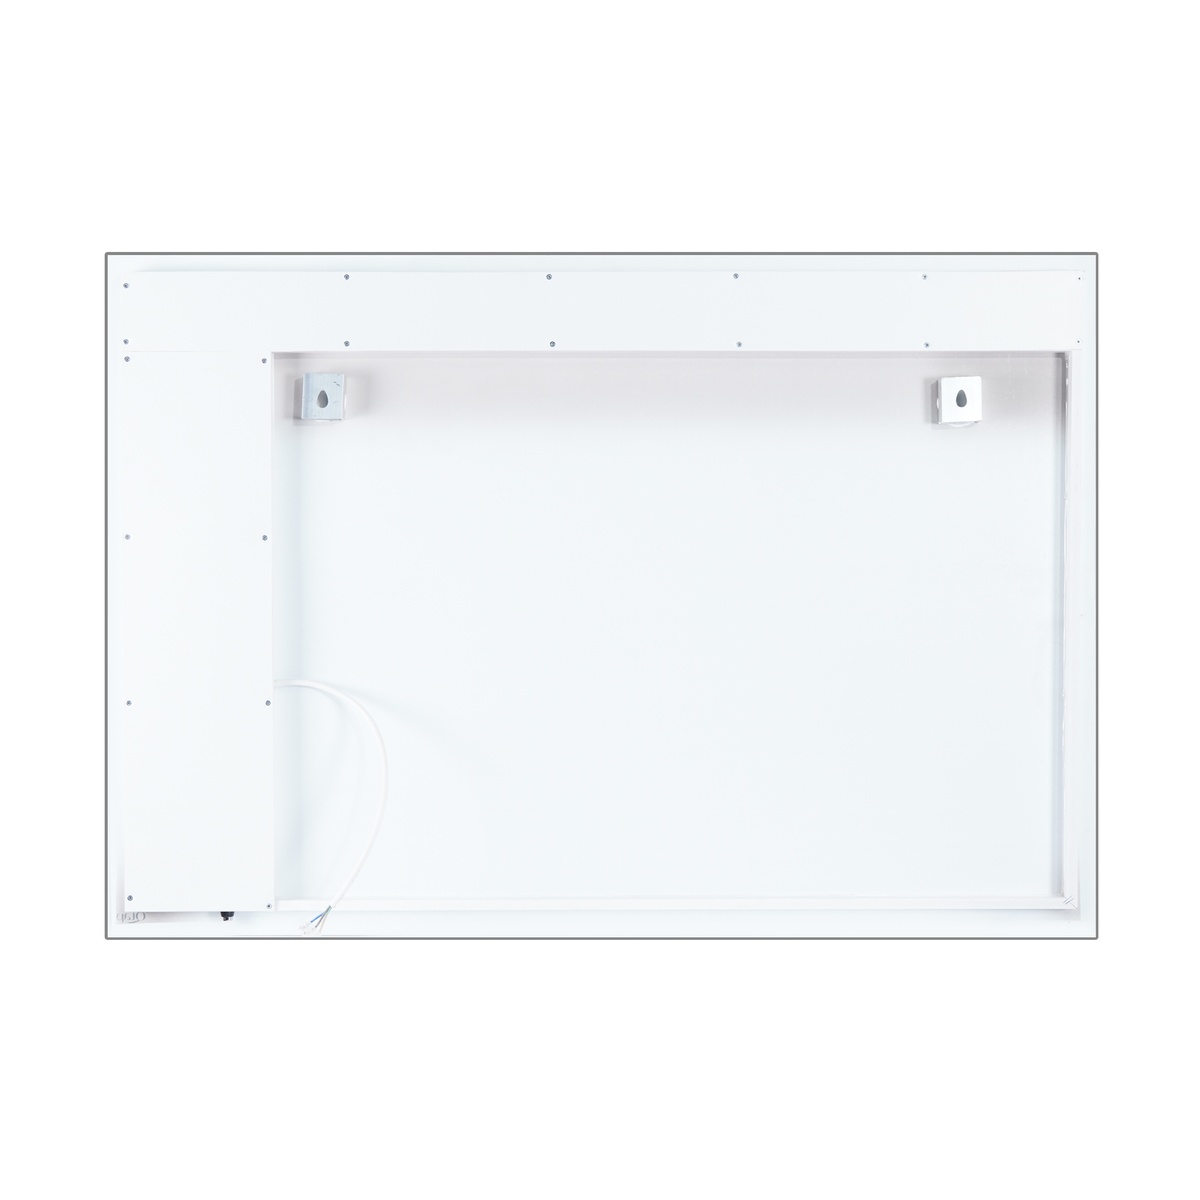 Зеркало прямоугольное для ванной Q-TAP Mideya Modern 70см x 100см c подсветкой QT2078141470100W